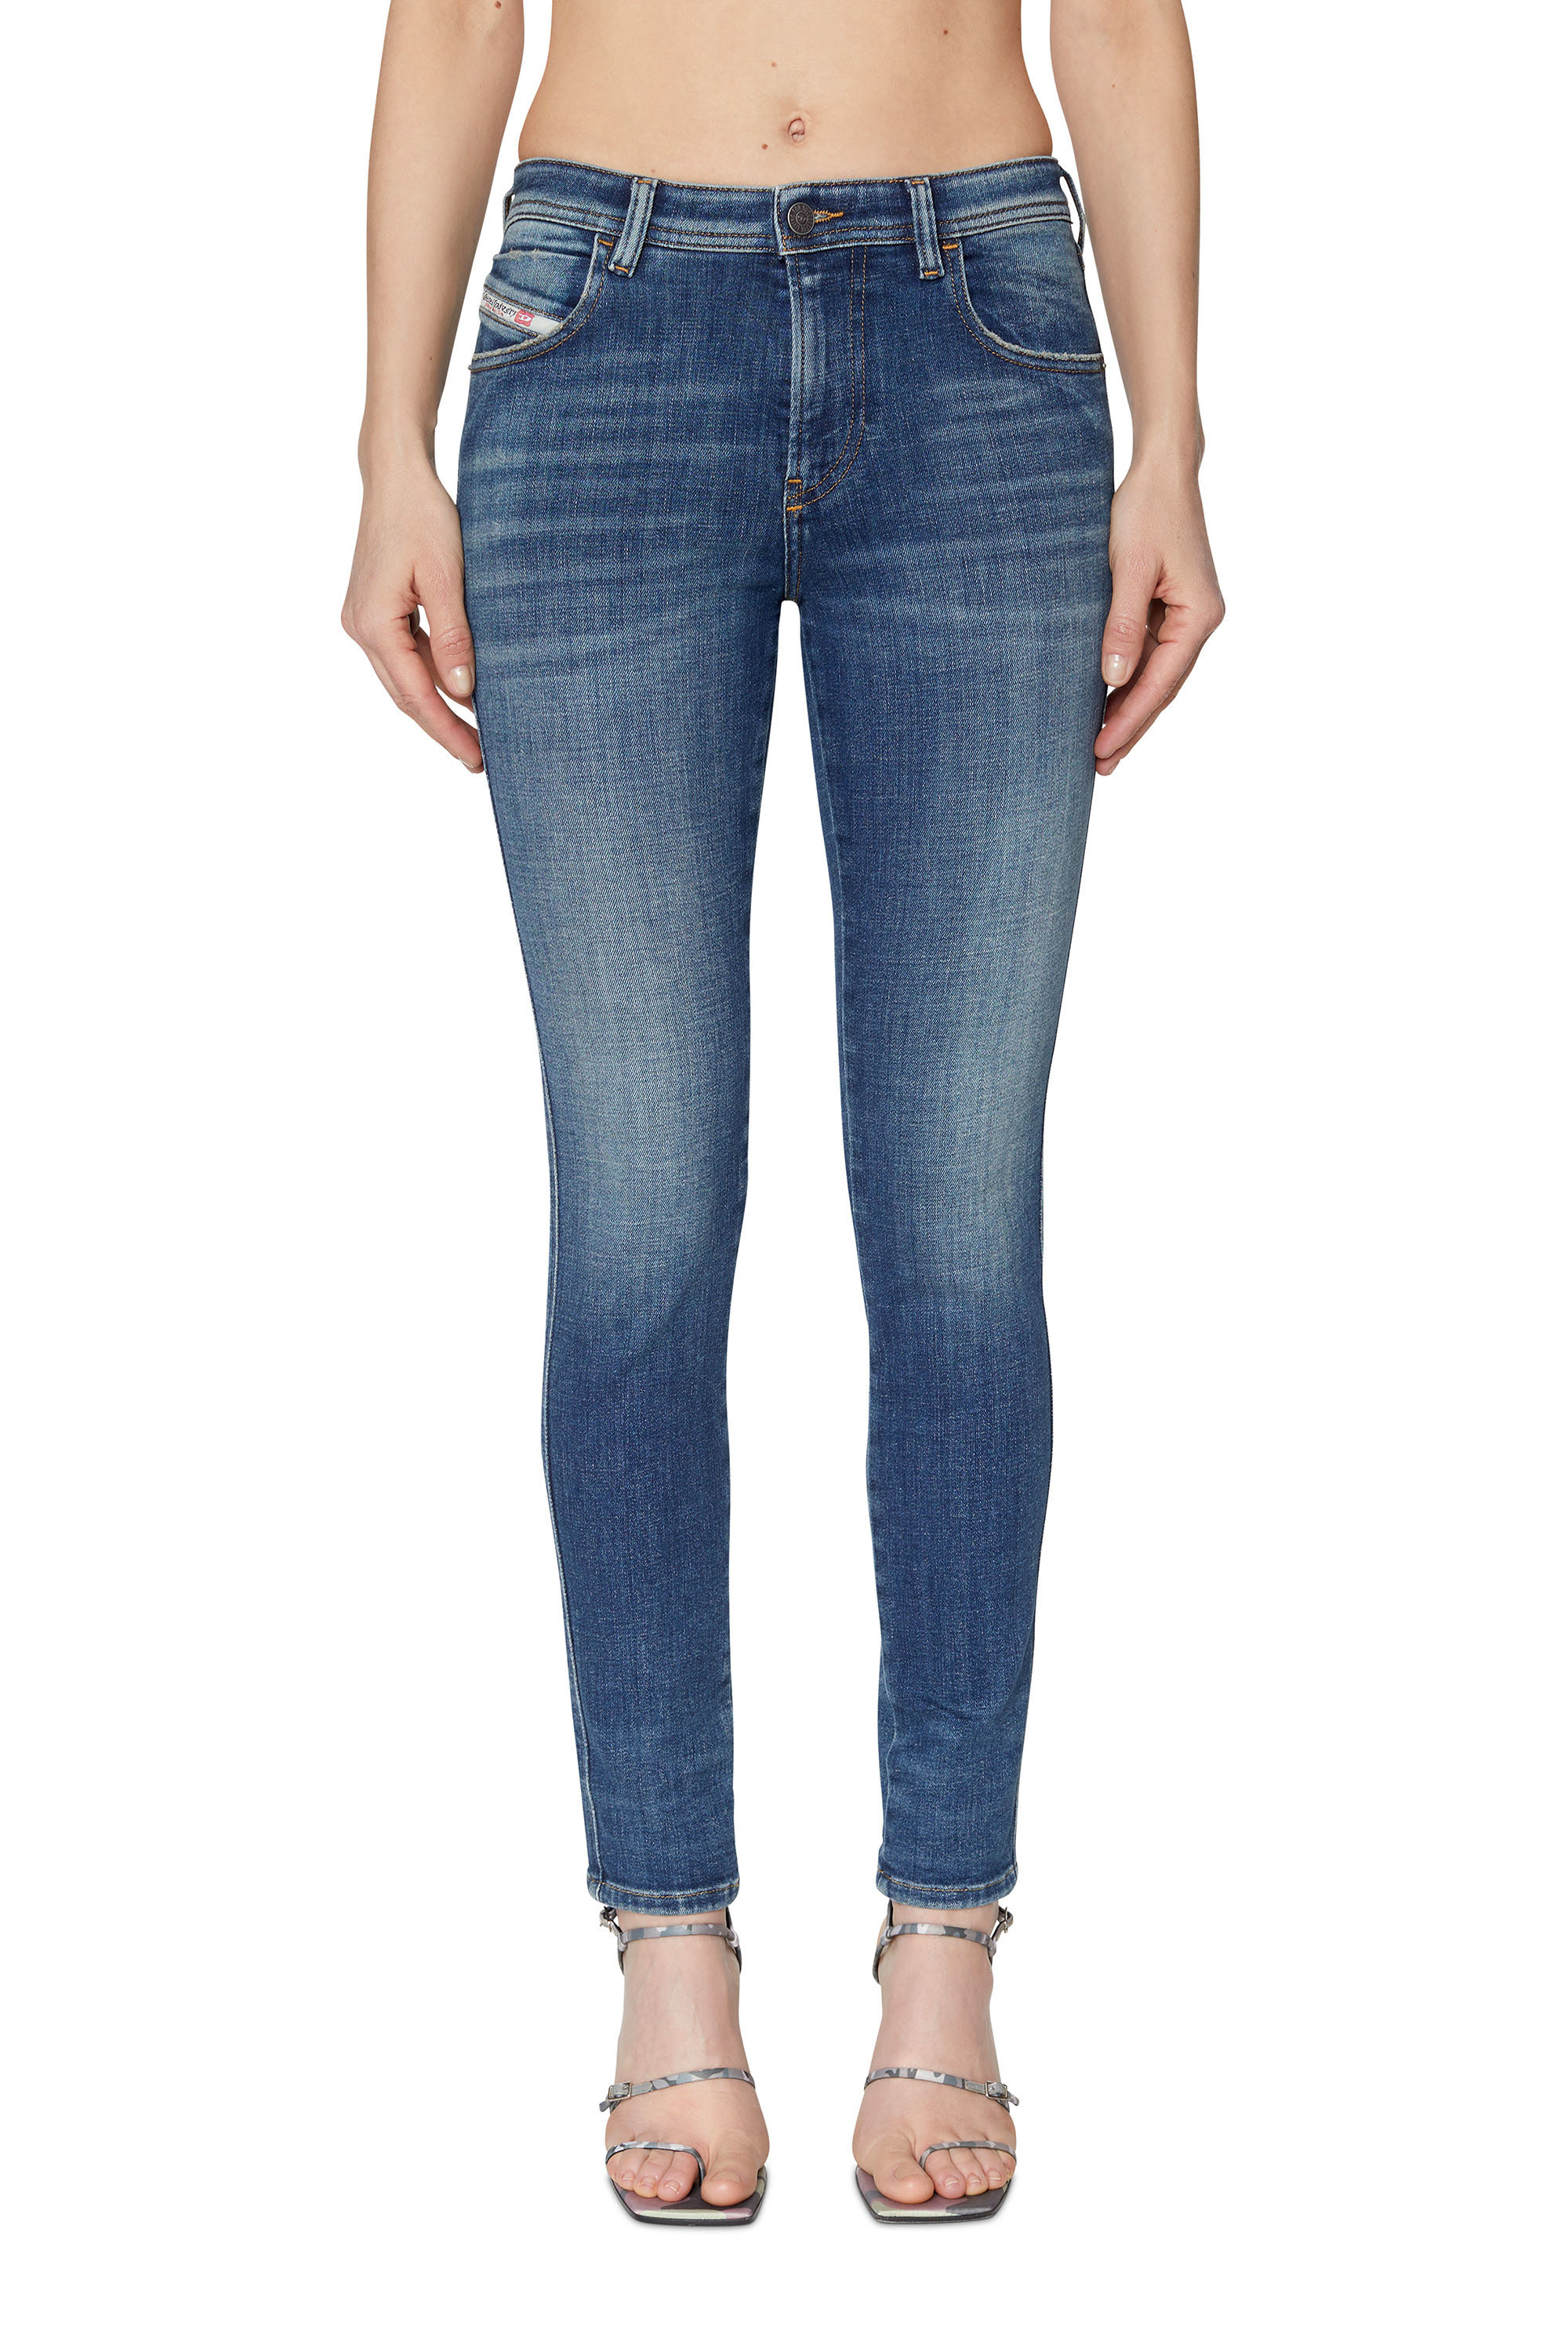 2015 BABHILA 09D99 Skinny Jeans, Medium blue - Jeans